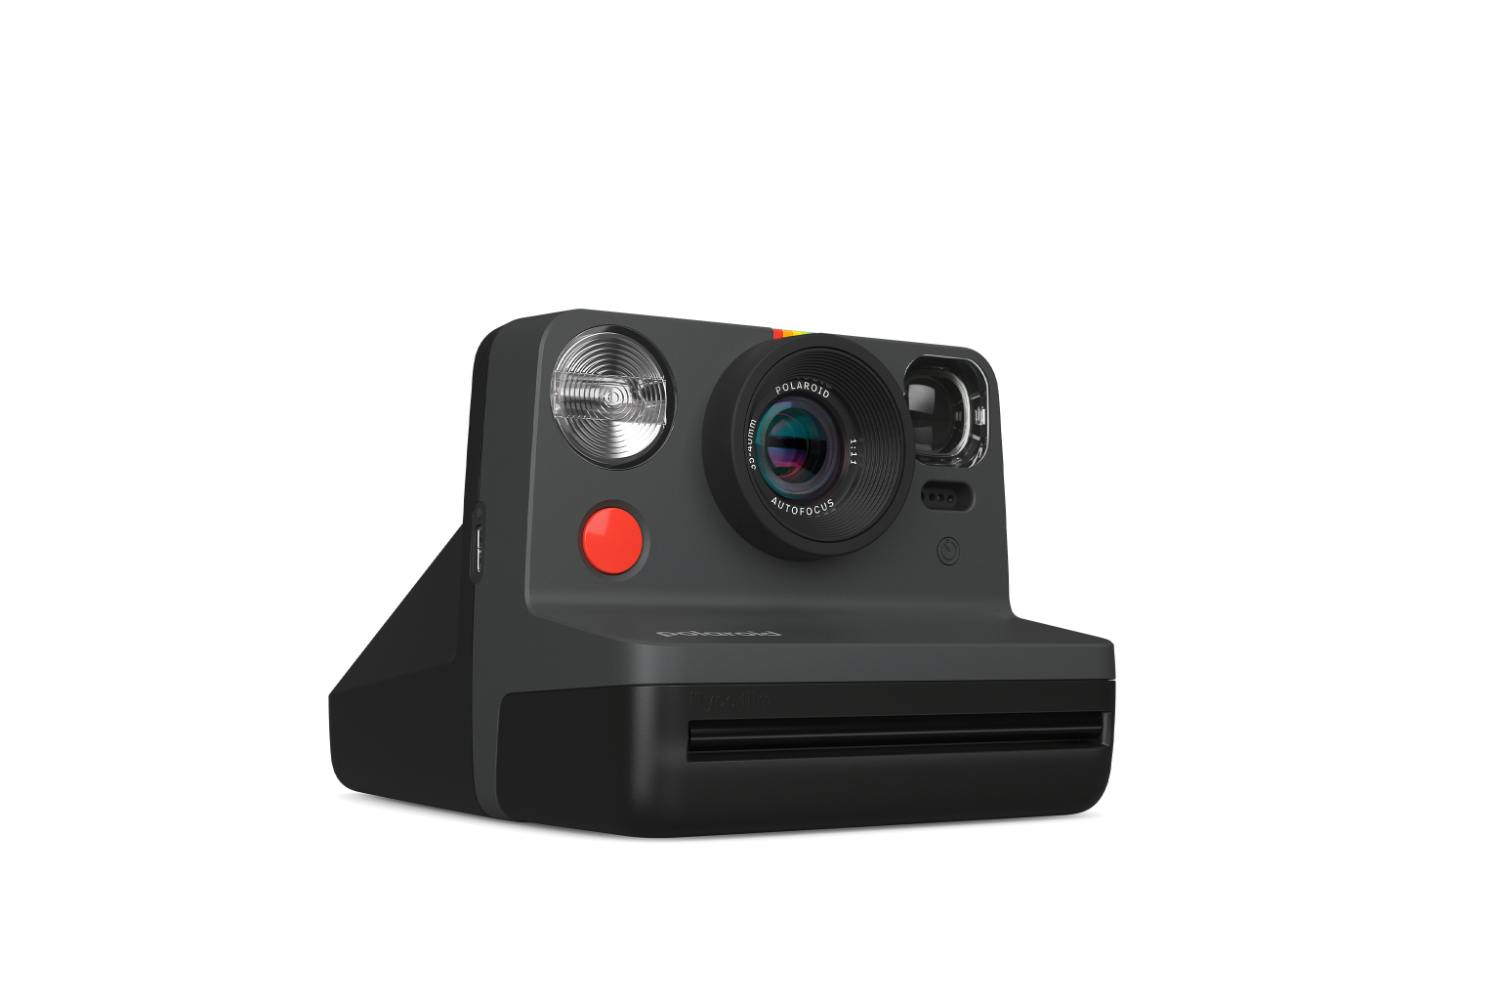 Buy POLAROID Go Gen 2 Instant Camera Set - Black